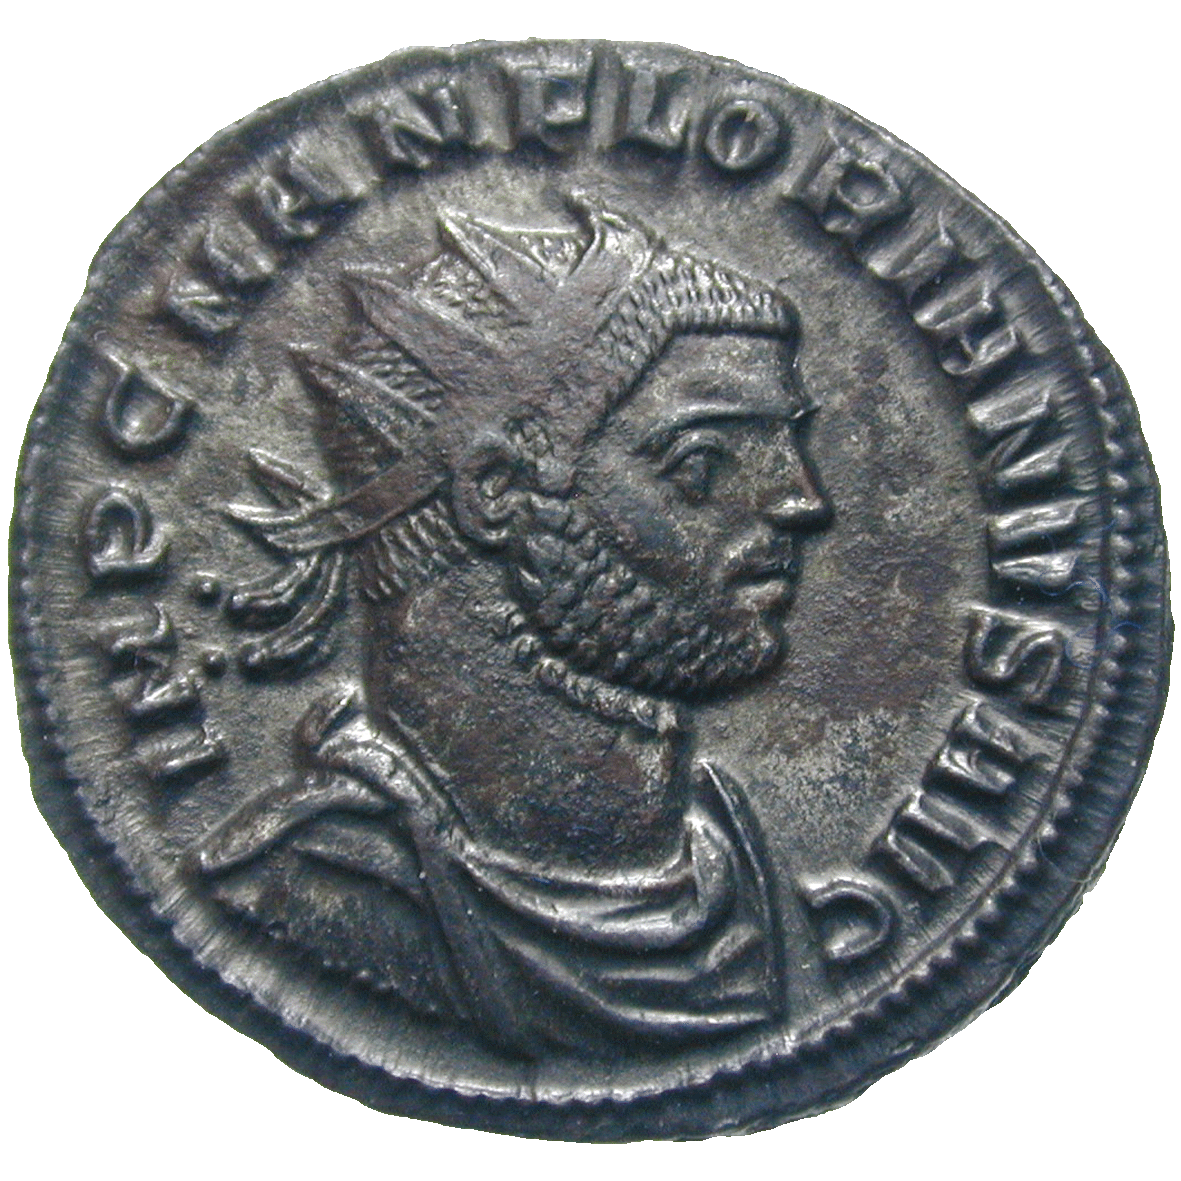 Römische Kaiserzeit, Florianus, Antoninian (obverse)